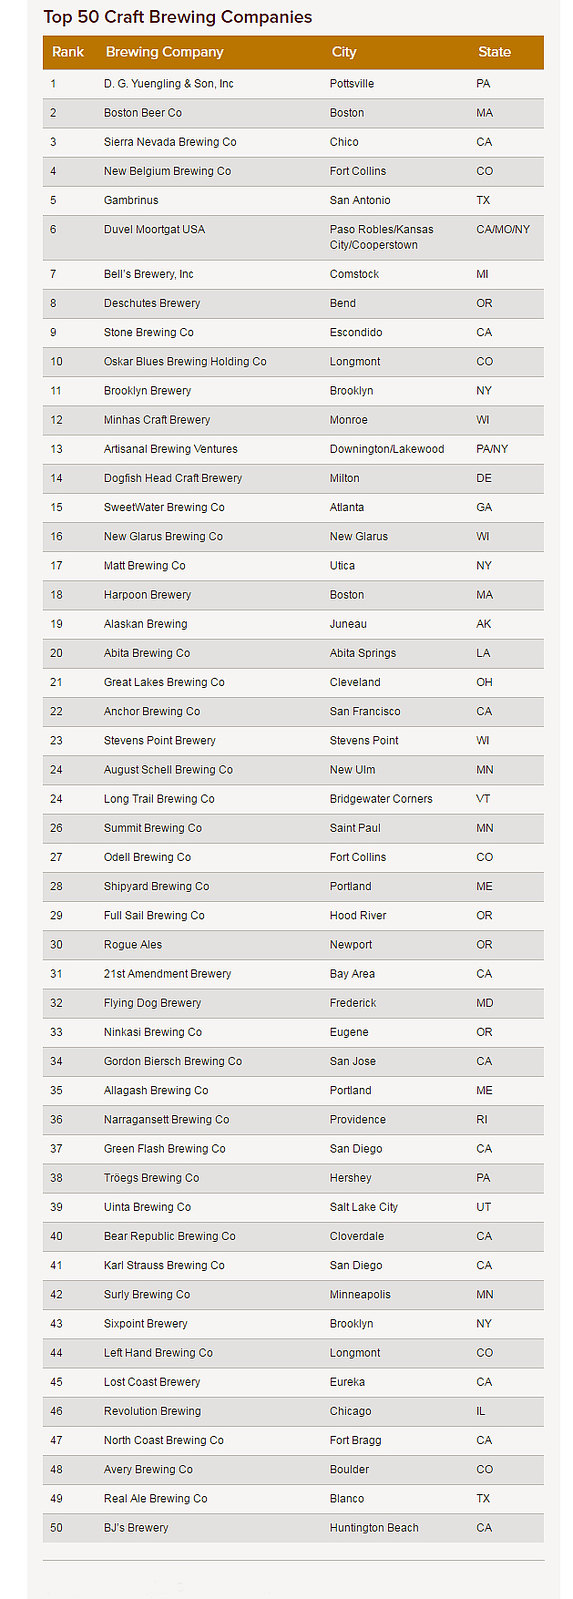 Top 50 U.S. 'Craft' Brewing Companies, by sales (2016)